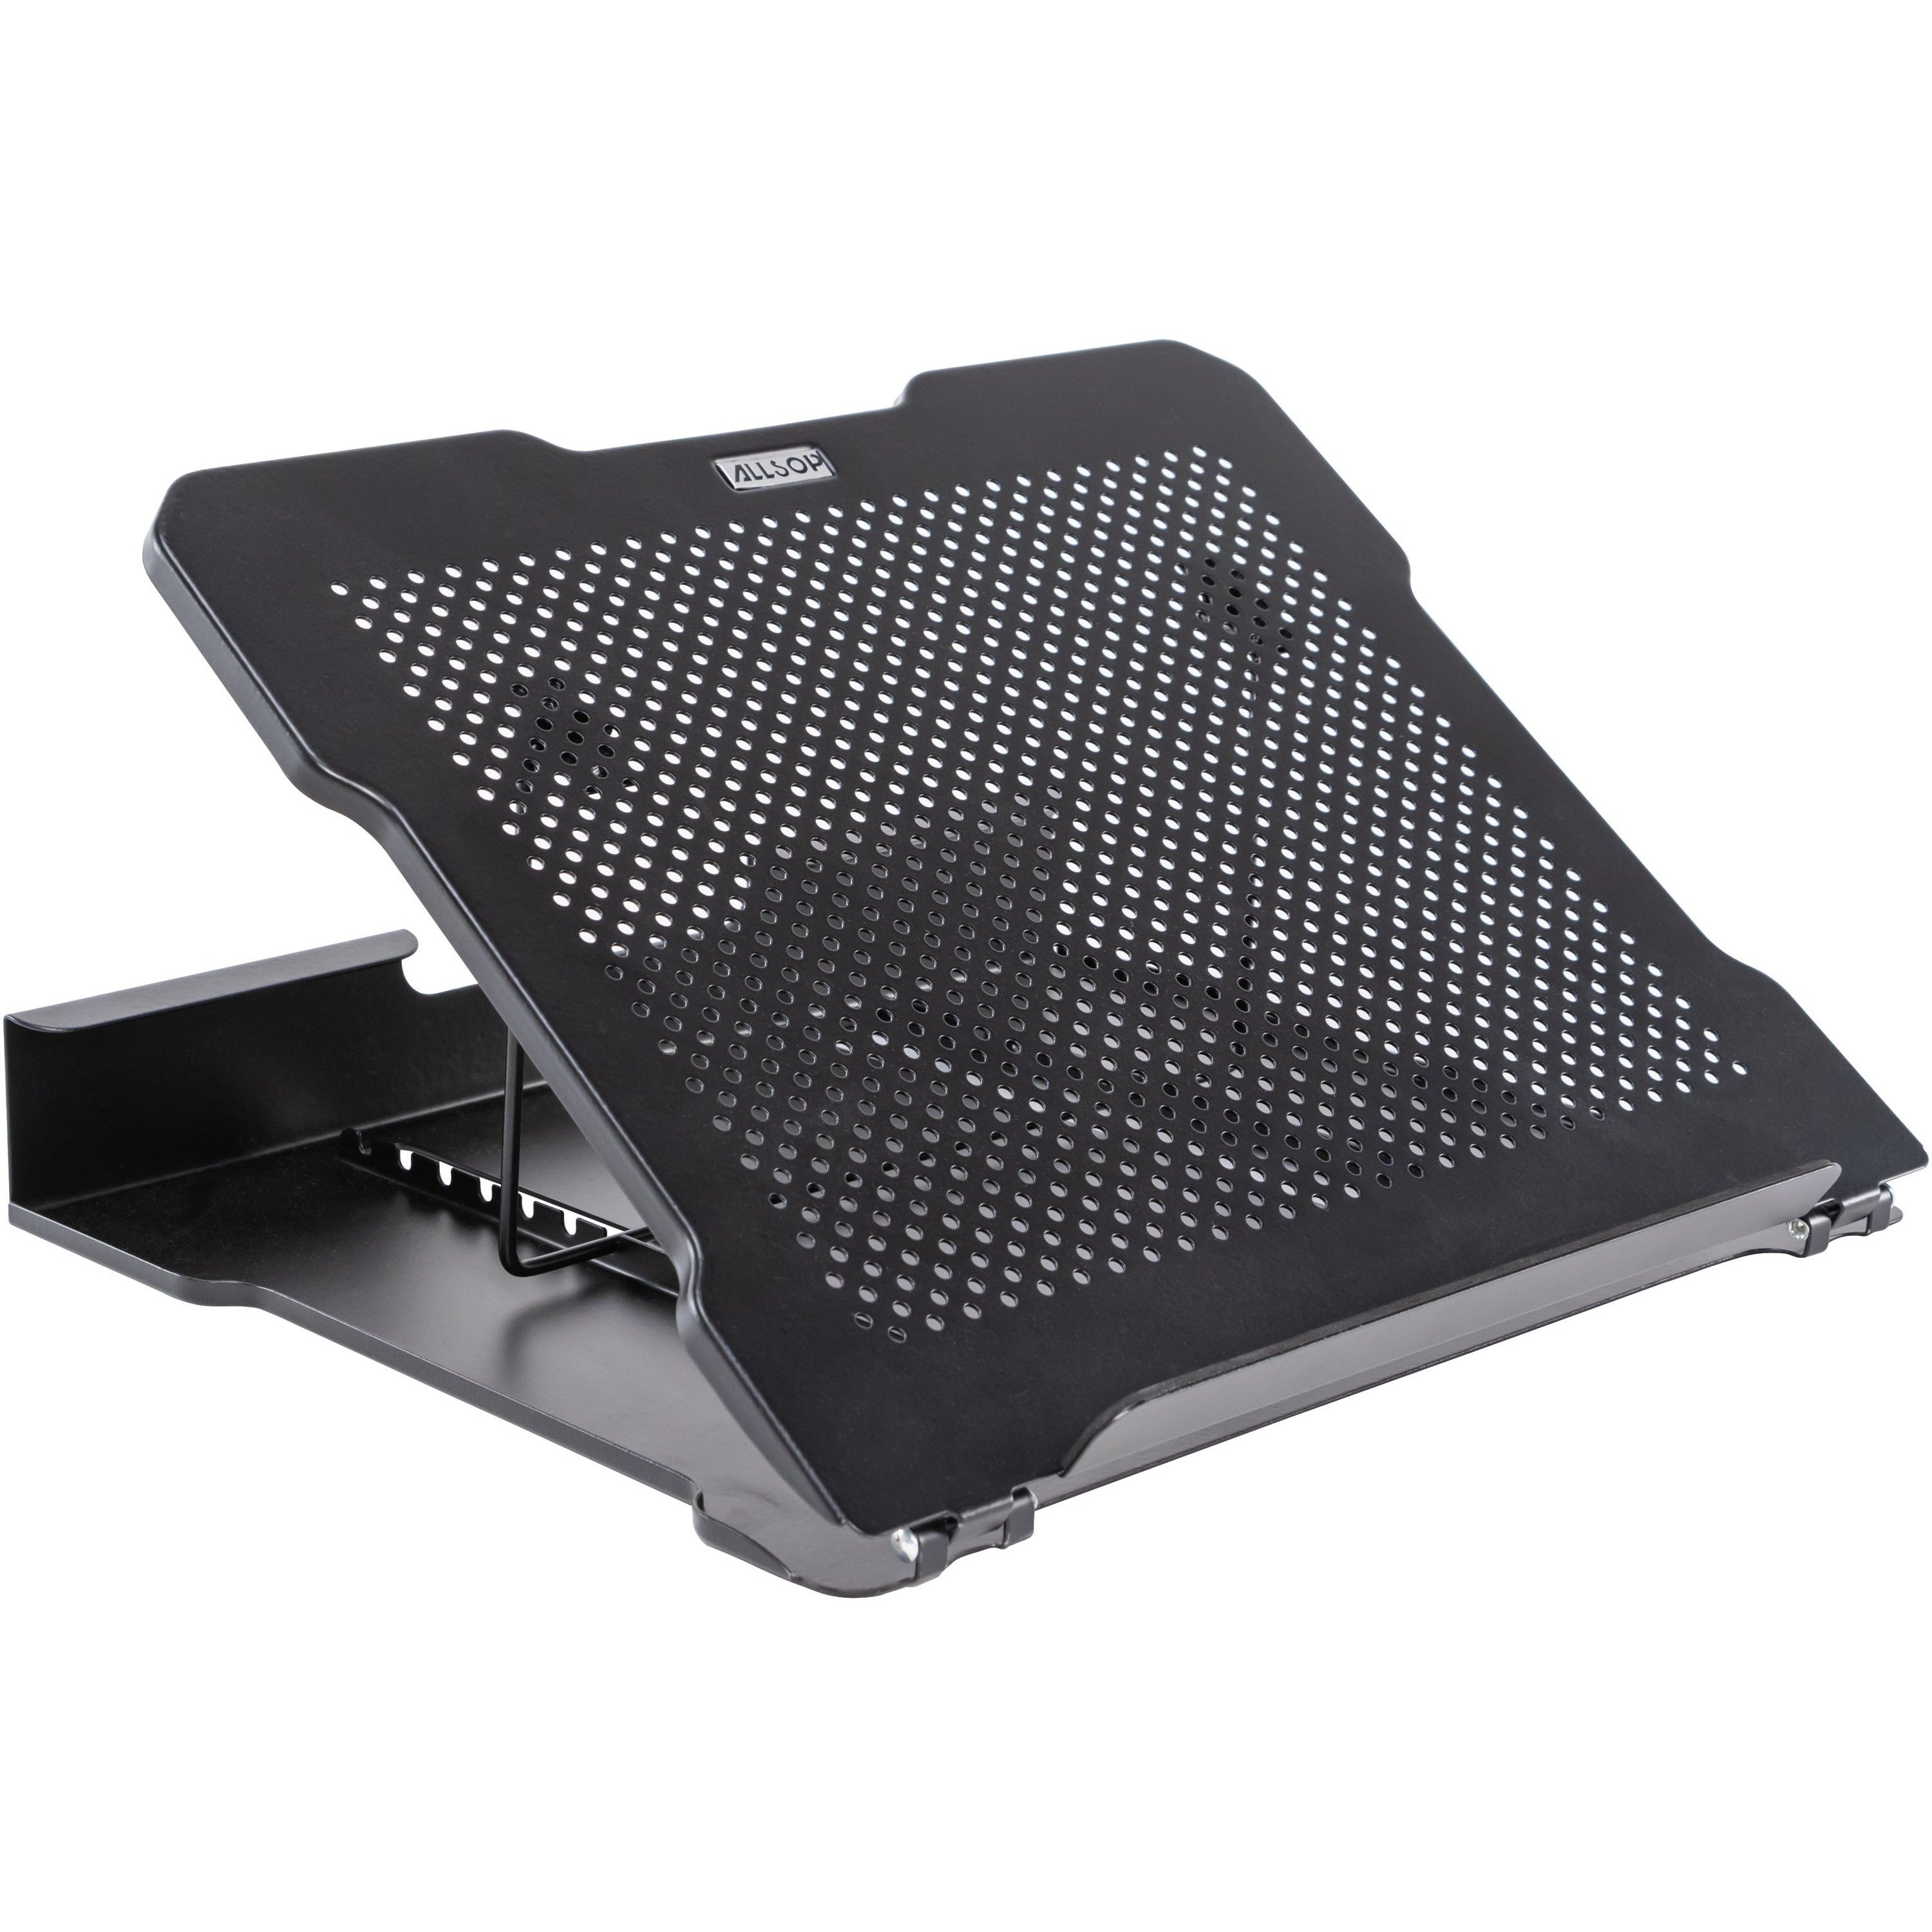 allsop-metal-art-adjustable-laptop-stand-with-7-positions-32147-23-height-x-13-width-x-11-depth-metal-black-pearl_asp32147 - 1